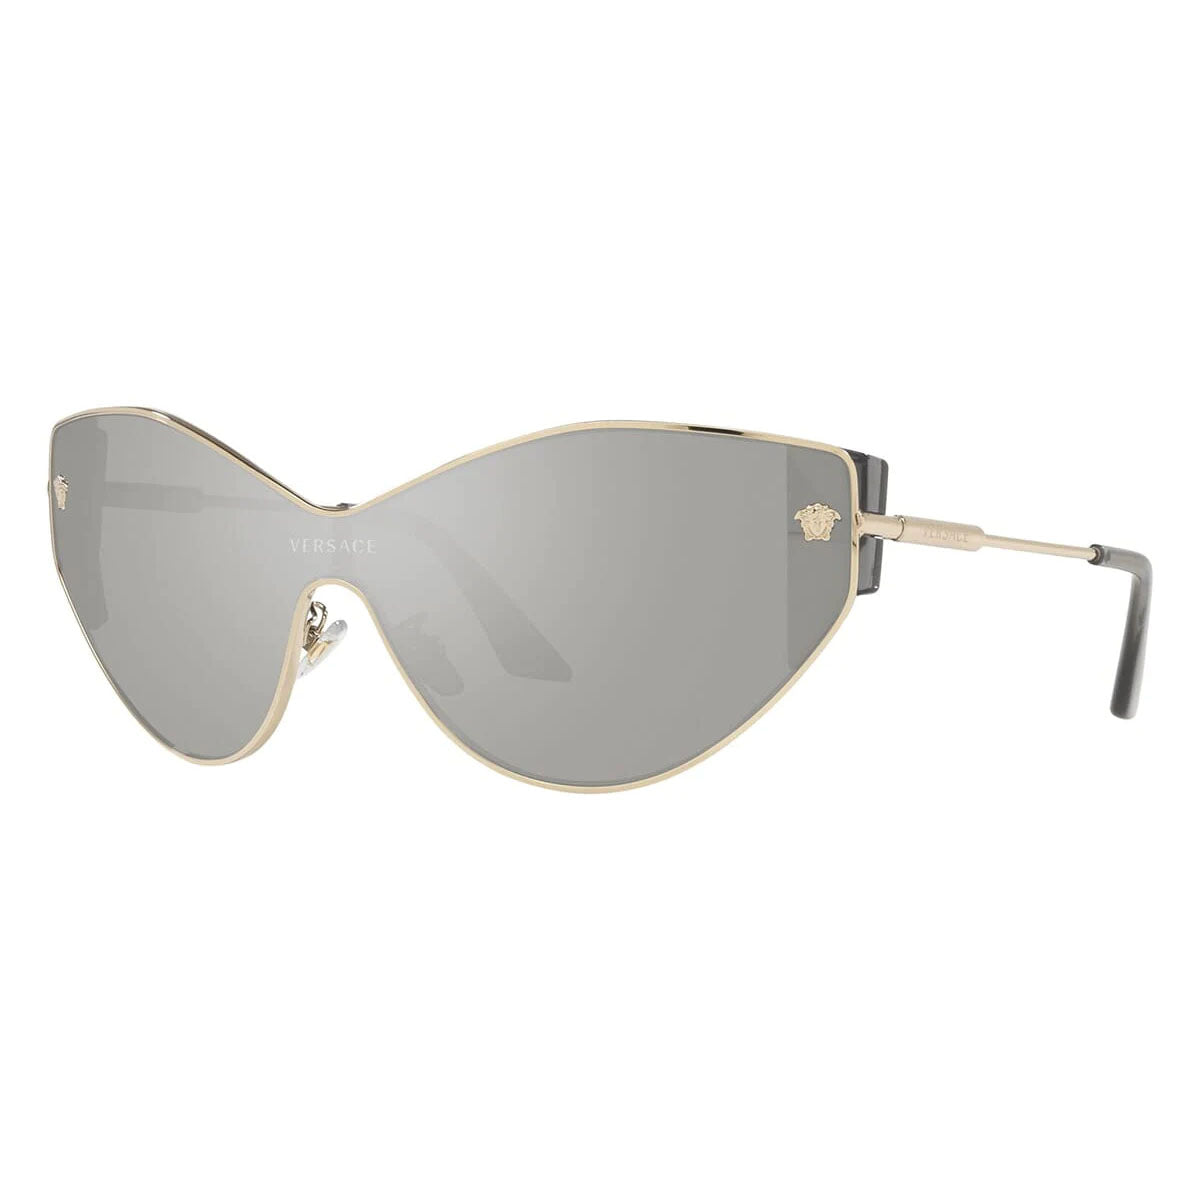 Versace Women's Sunglasses Cat Eye Gold/Grey Mirror VE223912526G